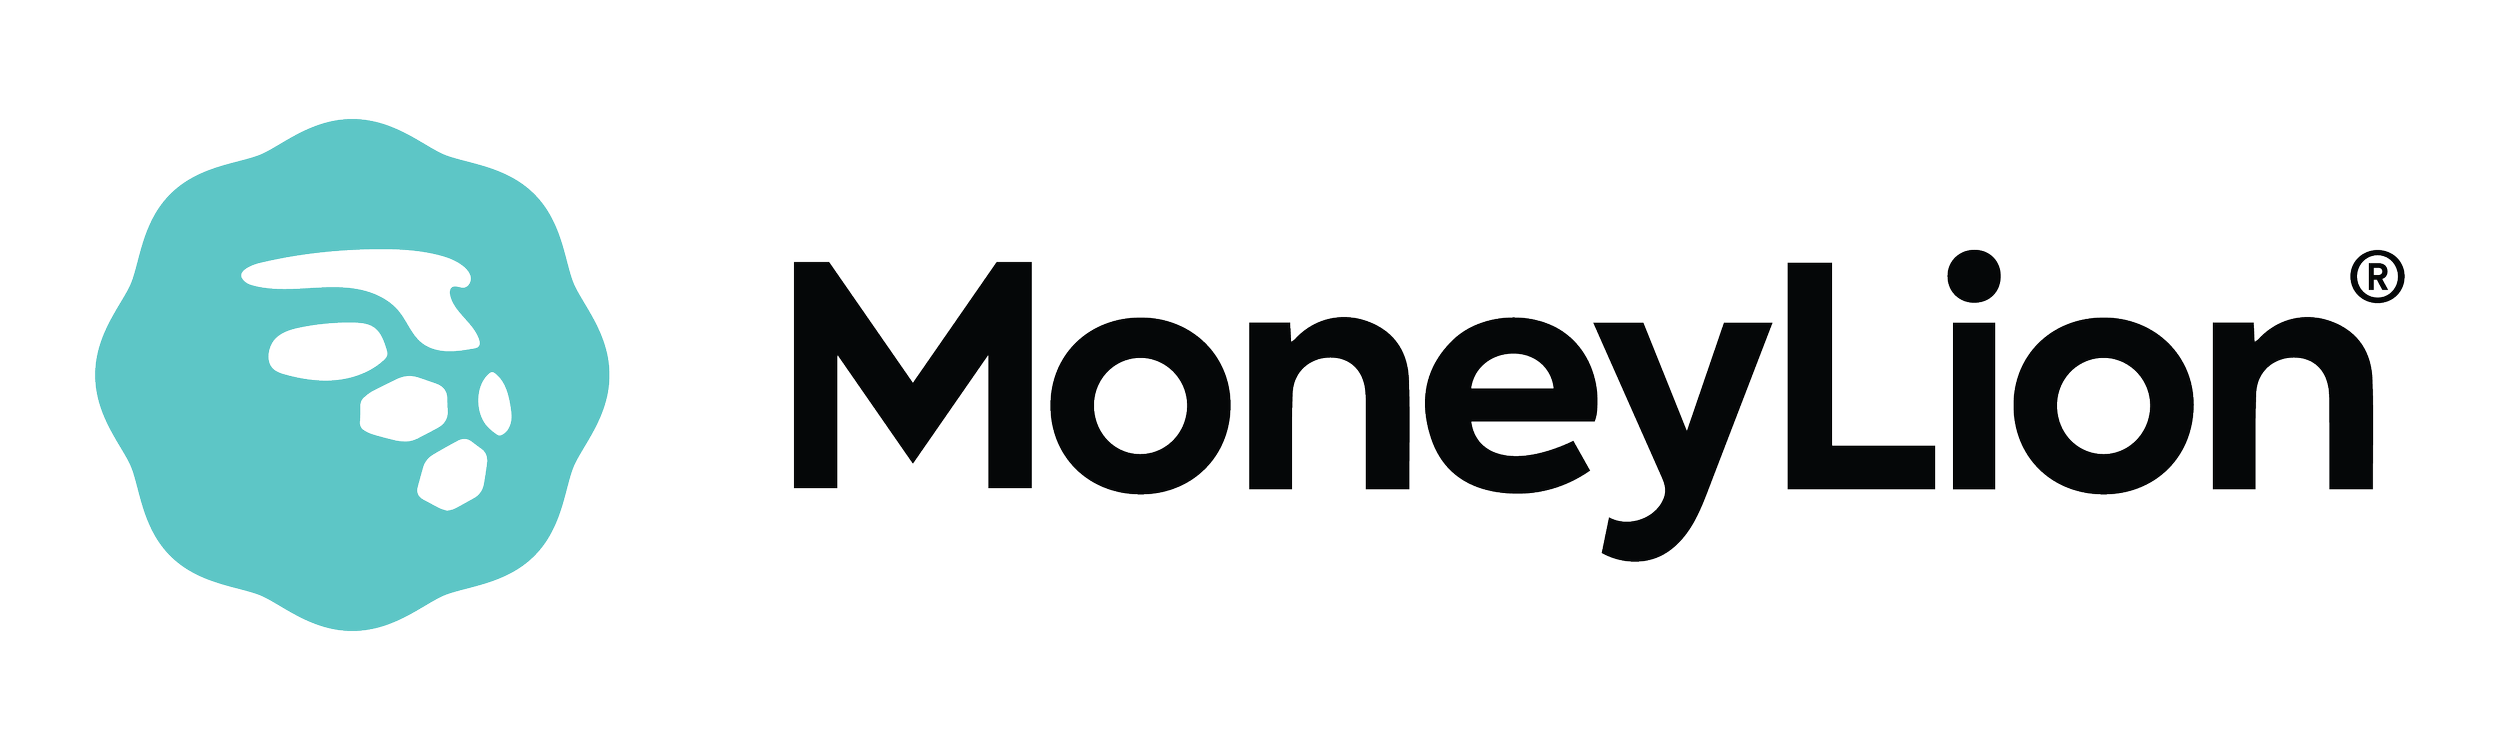 MoneyLion_Logo.png